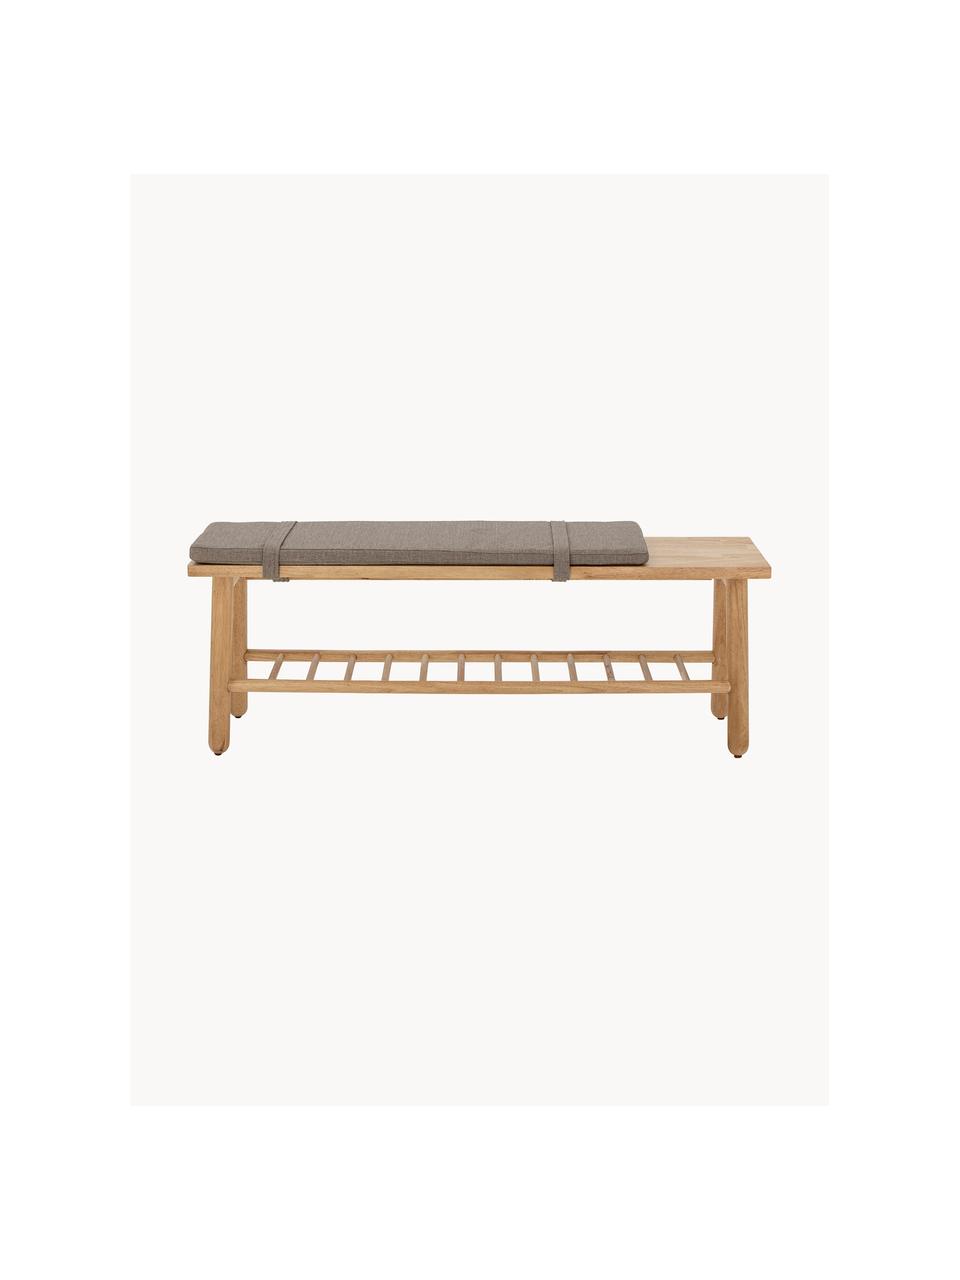 Lavička z kaučukového dřeva Linde, Greige, kaučukové dřevo, Š 120 cm, H 30 cm